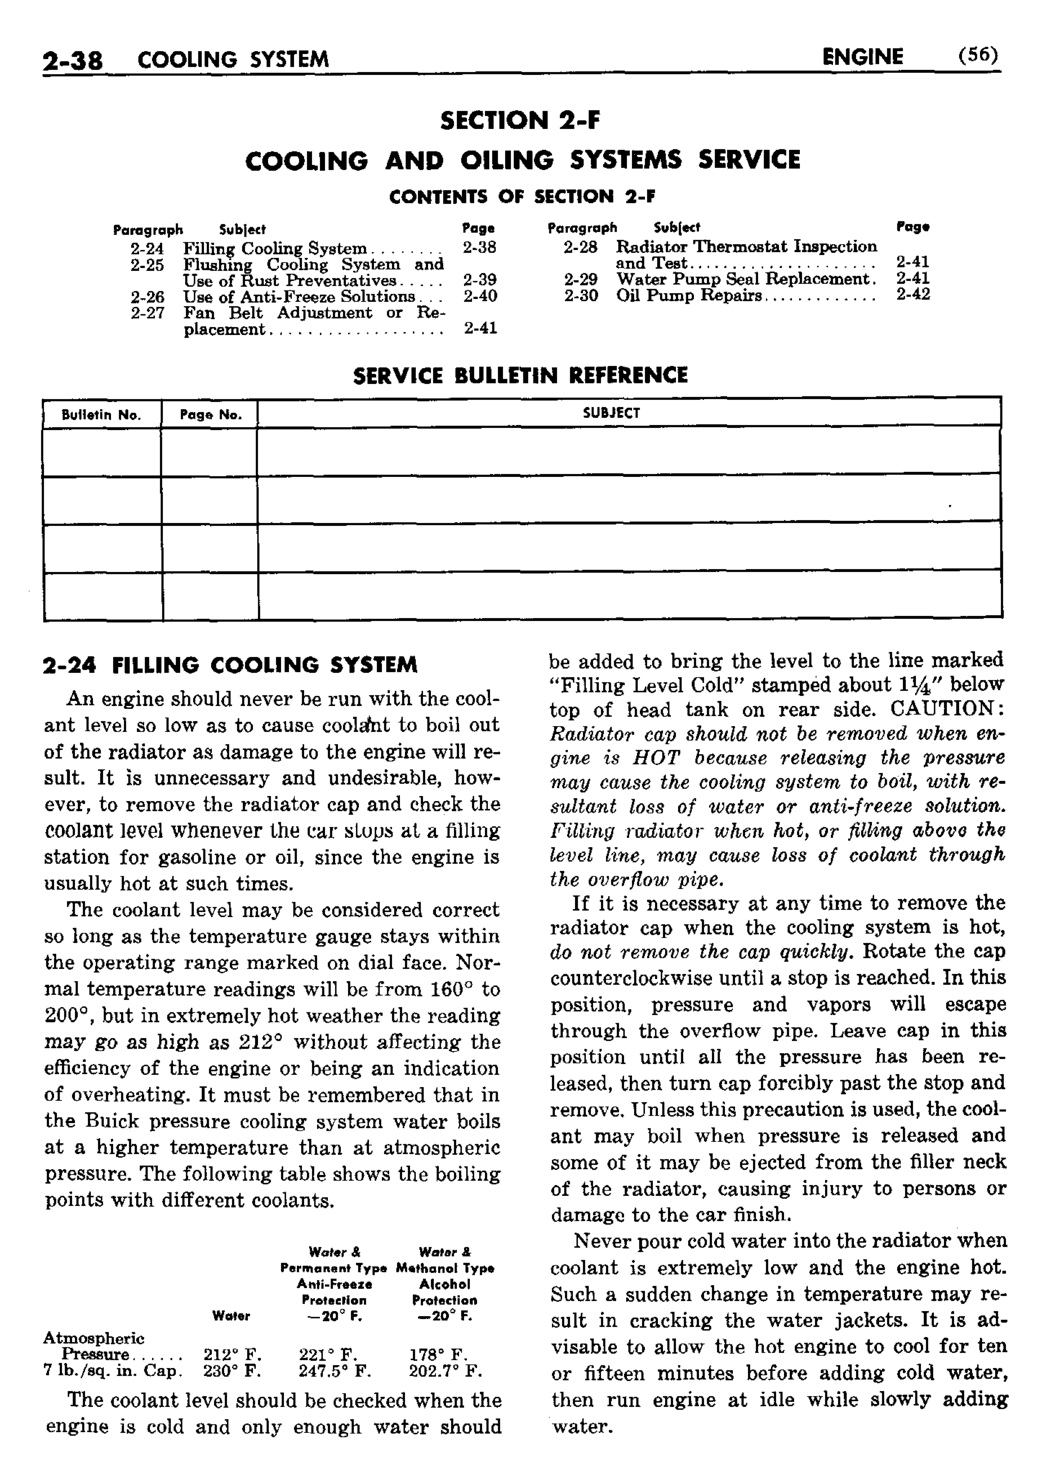 n_03 1950 Buick Shop Manual - Engine-038-038.jpg